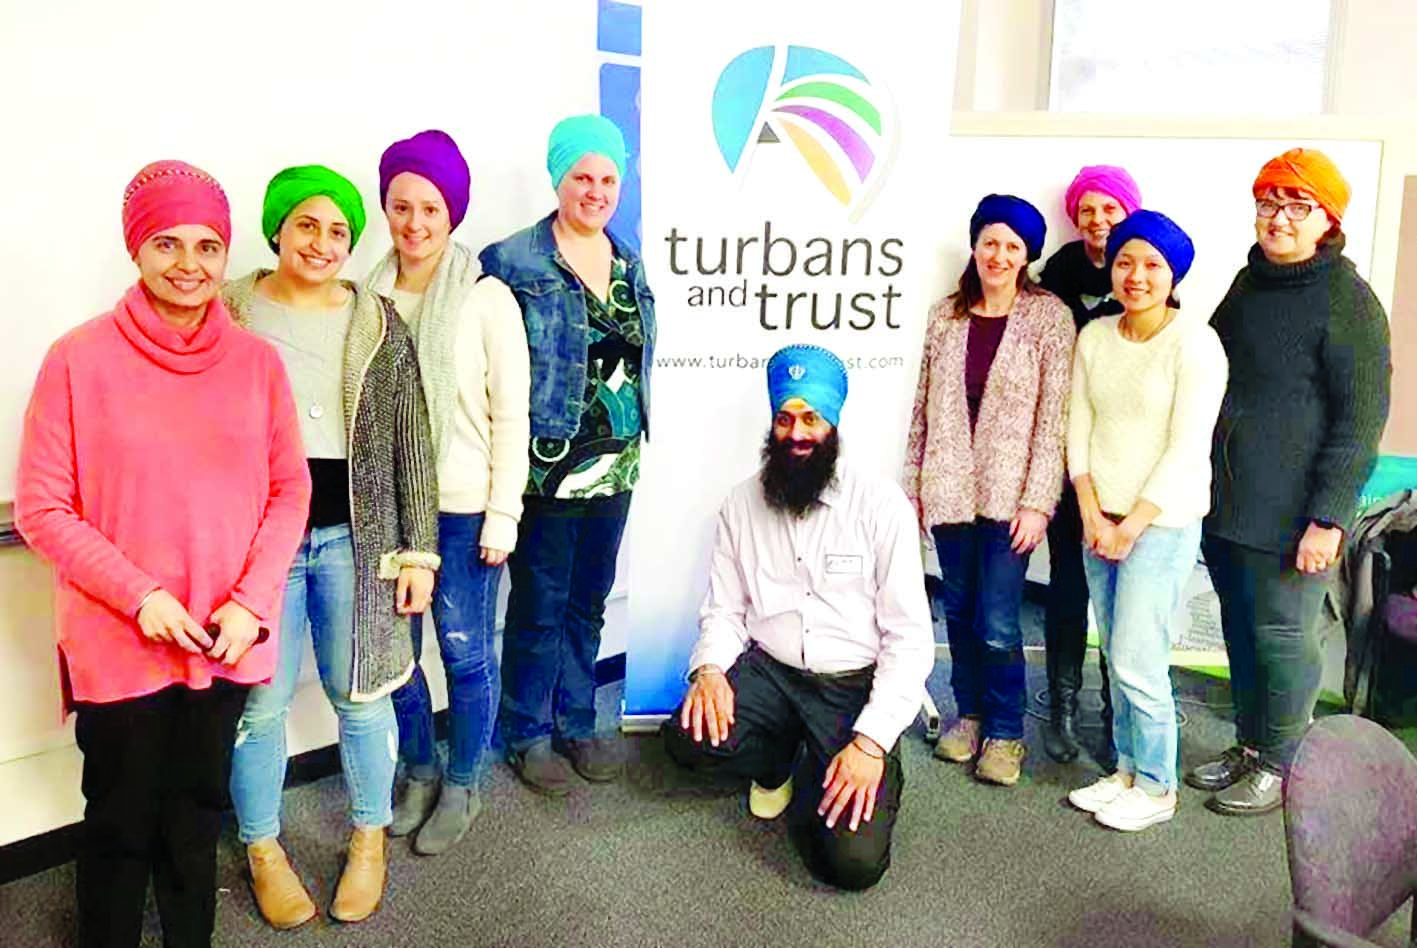 Turban and trust organisation